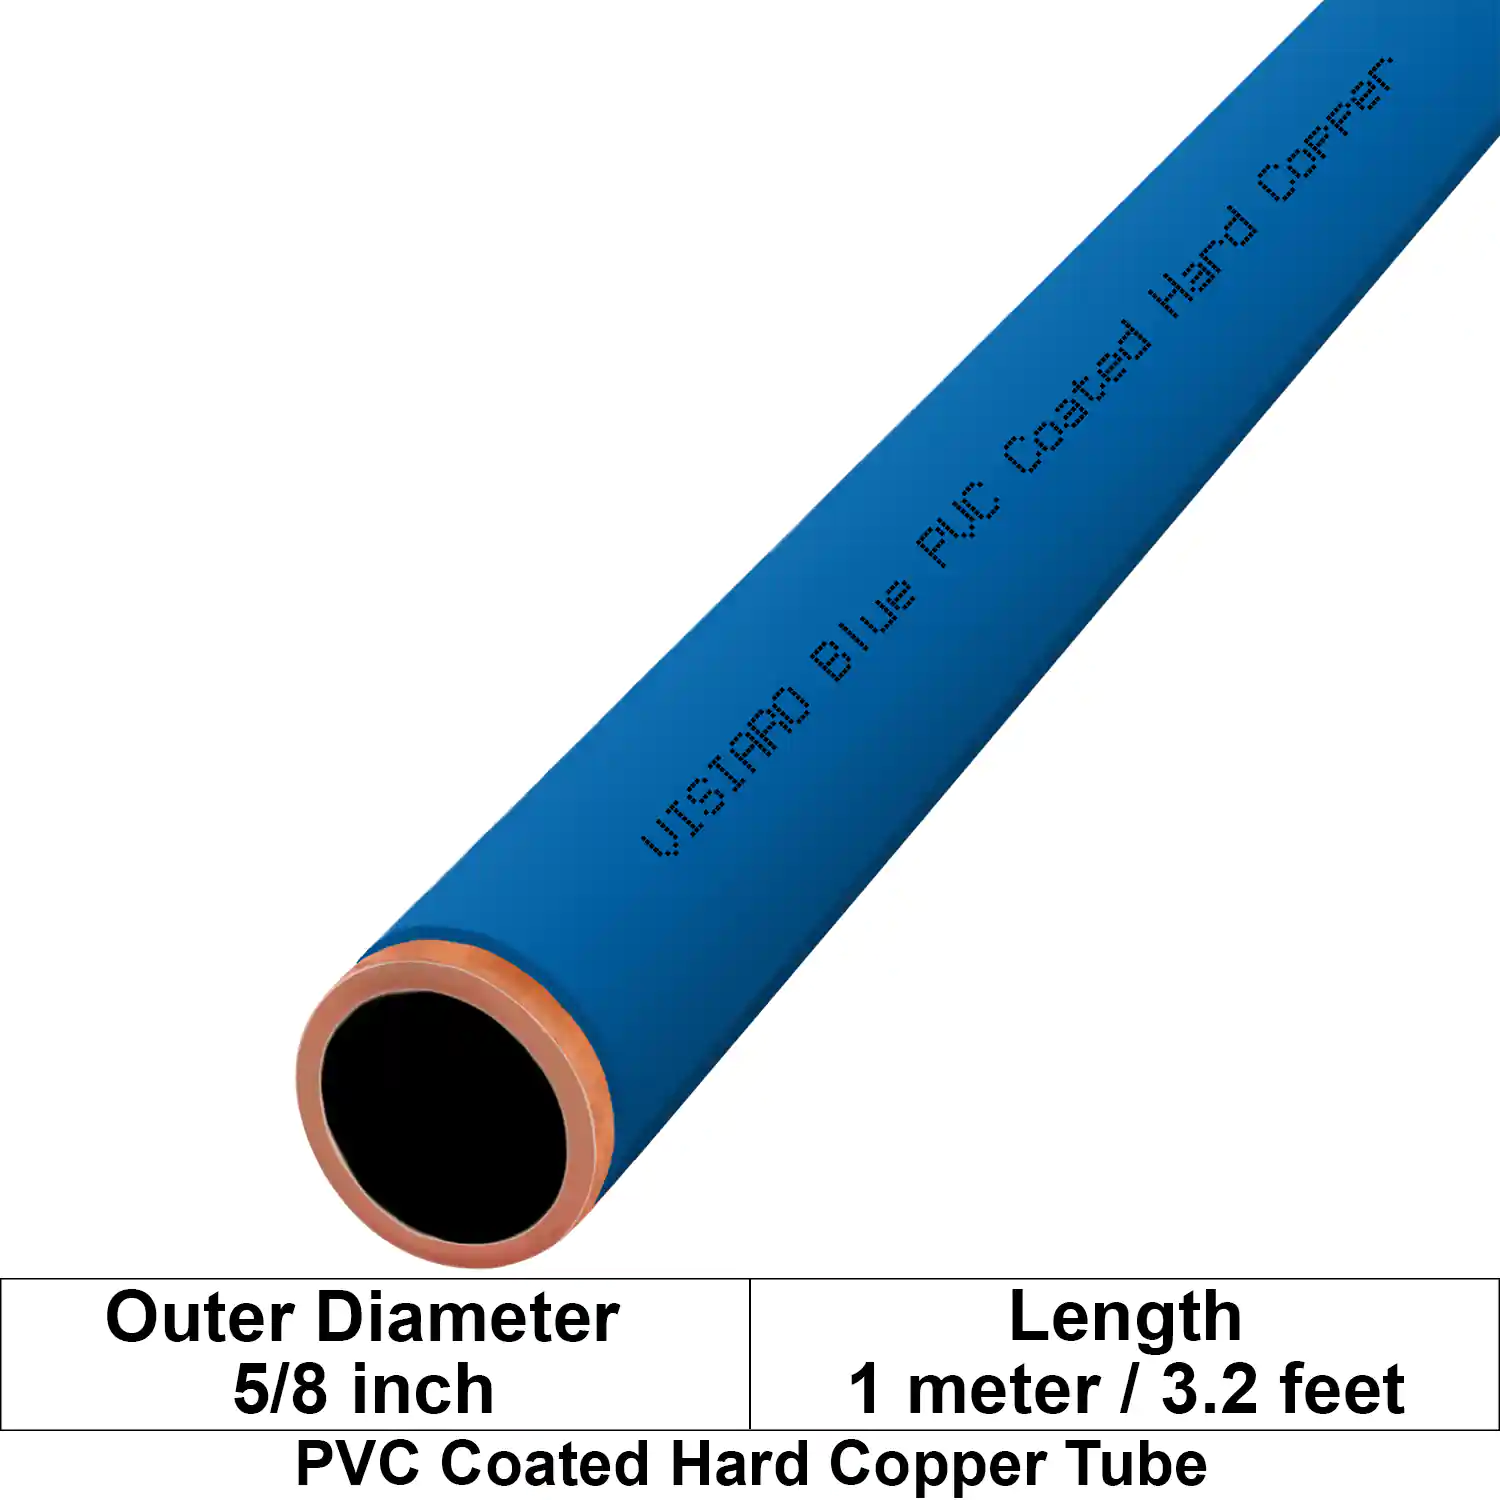 Visiaro Blue PVC Coated Hard Copper Tube 1mtr long Outer Diameter - 5/8 inch